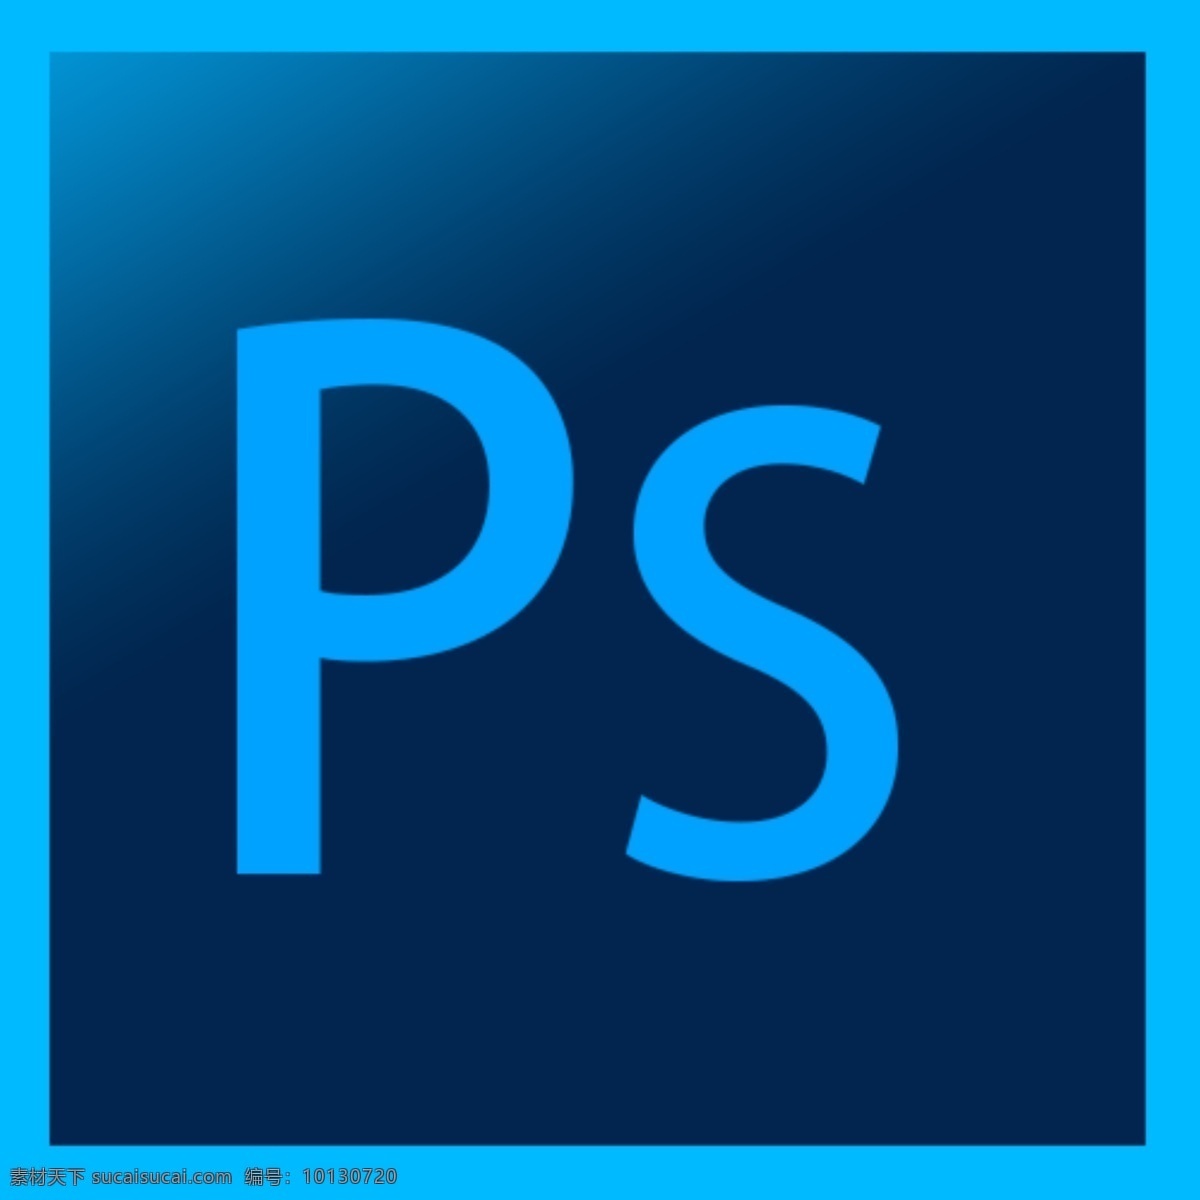 ps图标 photoshop 图标 软件图标 icon设计 ps 源文件 北大青鸟 web 界面设计 图标按钮